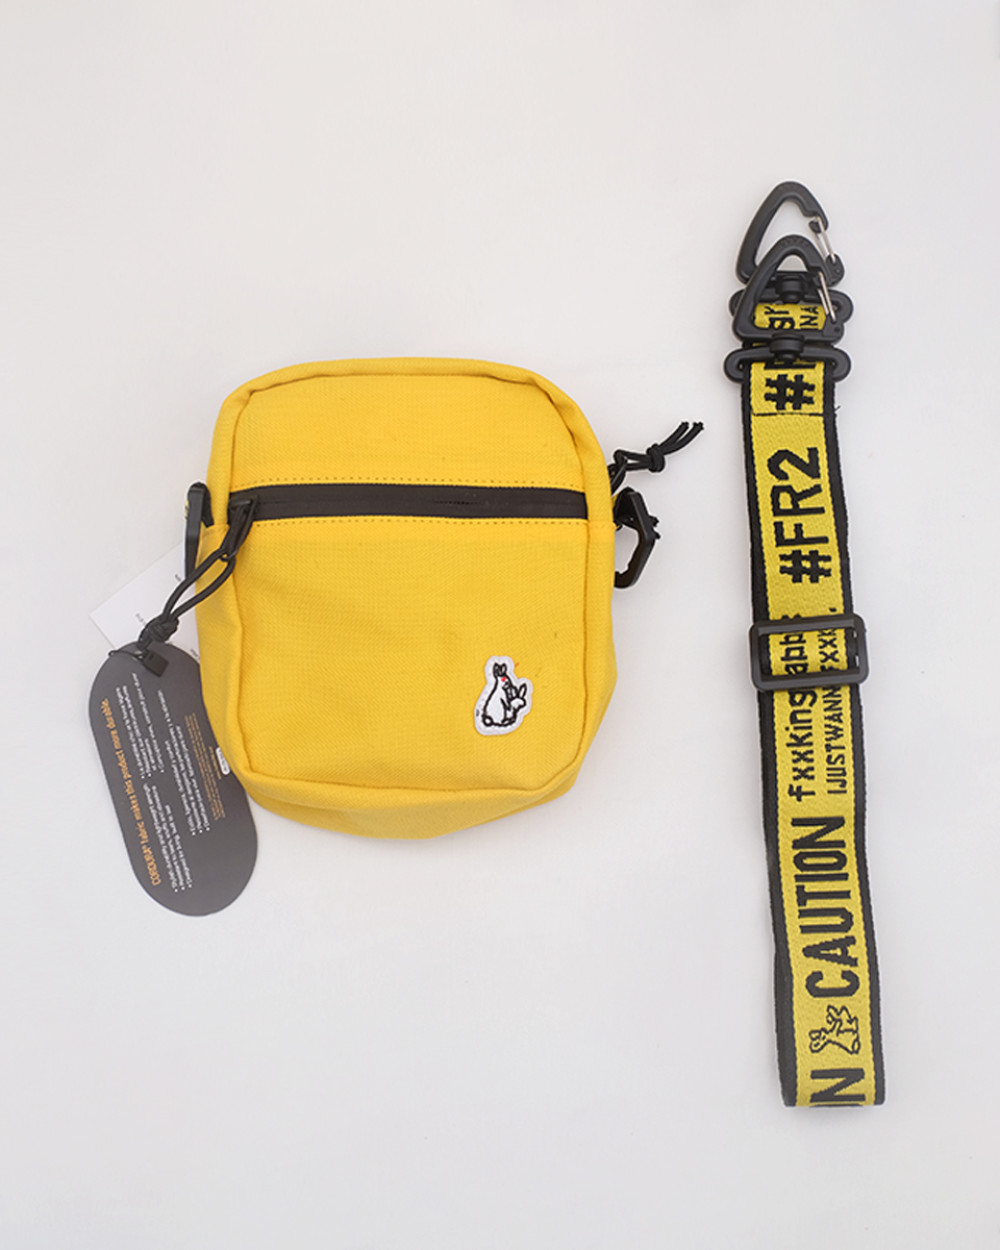 Fr2 Small Shoulder Bag Yellow